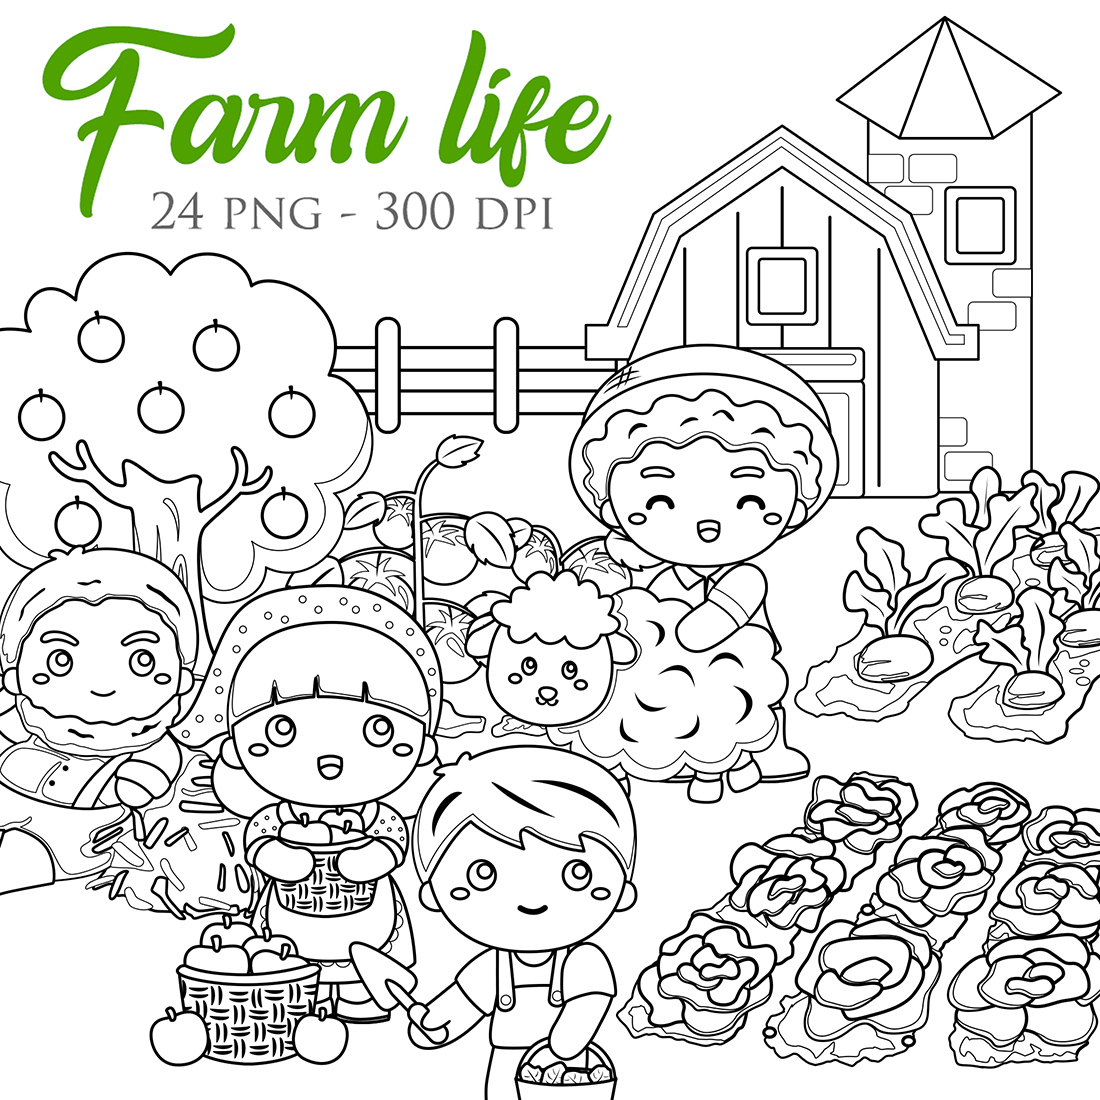 Farmer Family Farm Life Harvest Vegetables and Animals Digital Stamp Outline cover image.